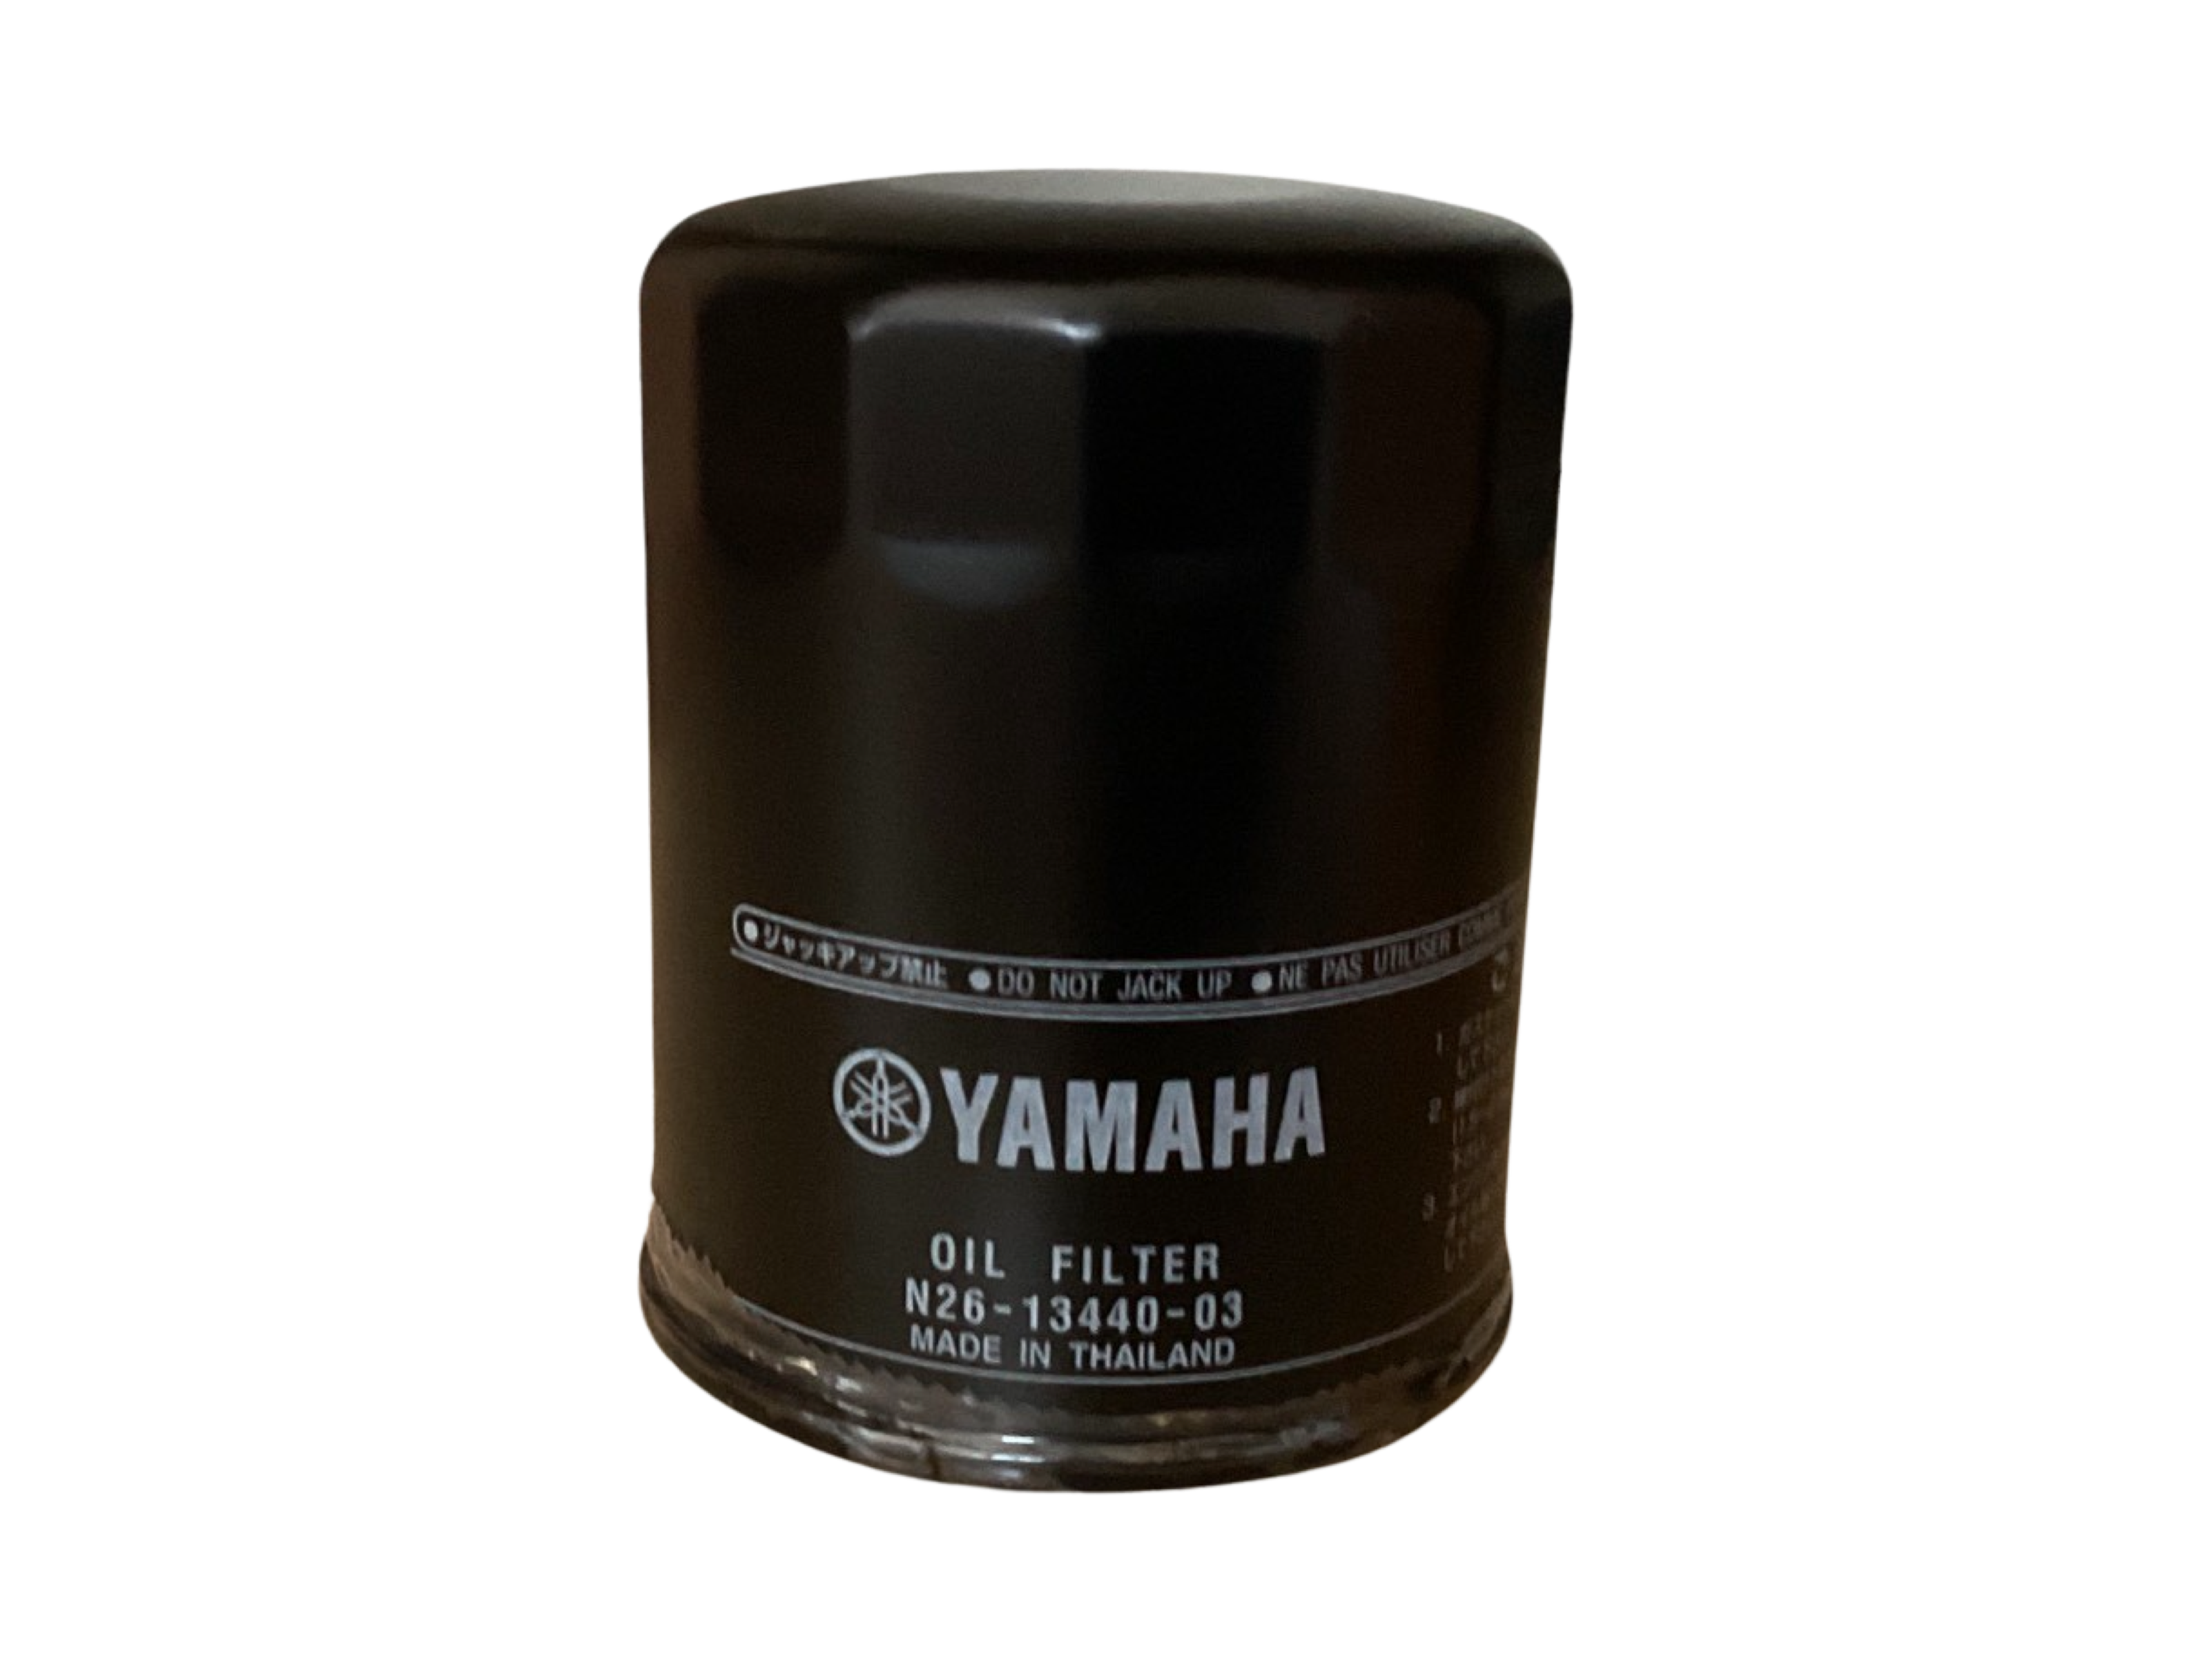 Yamaha Oil Filter P/N: N26-13440-03